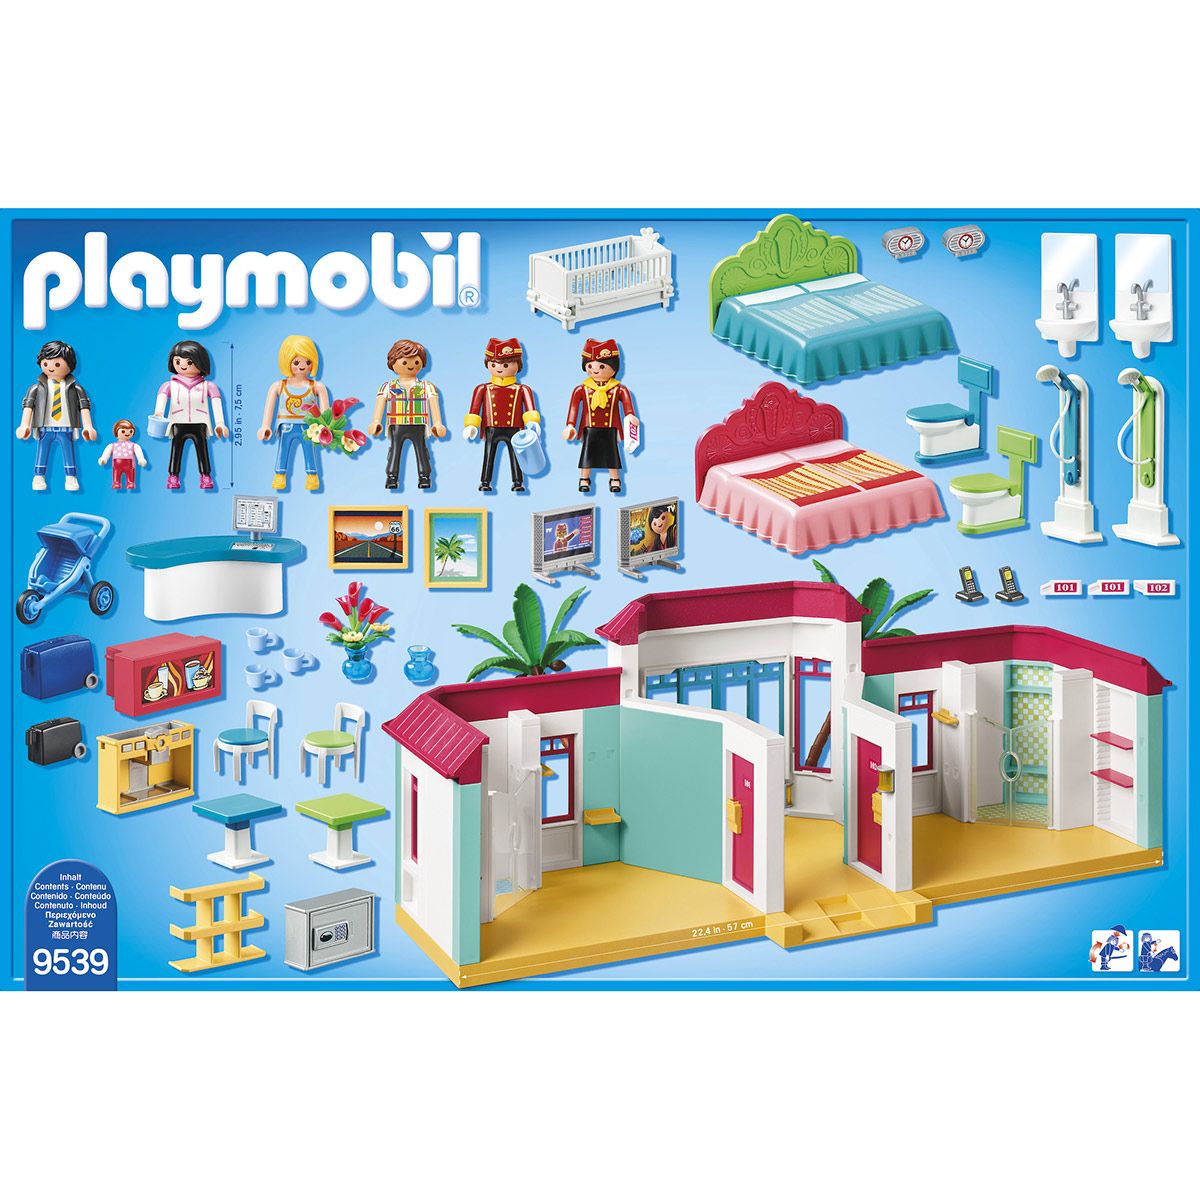 playmobil family fun hotel